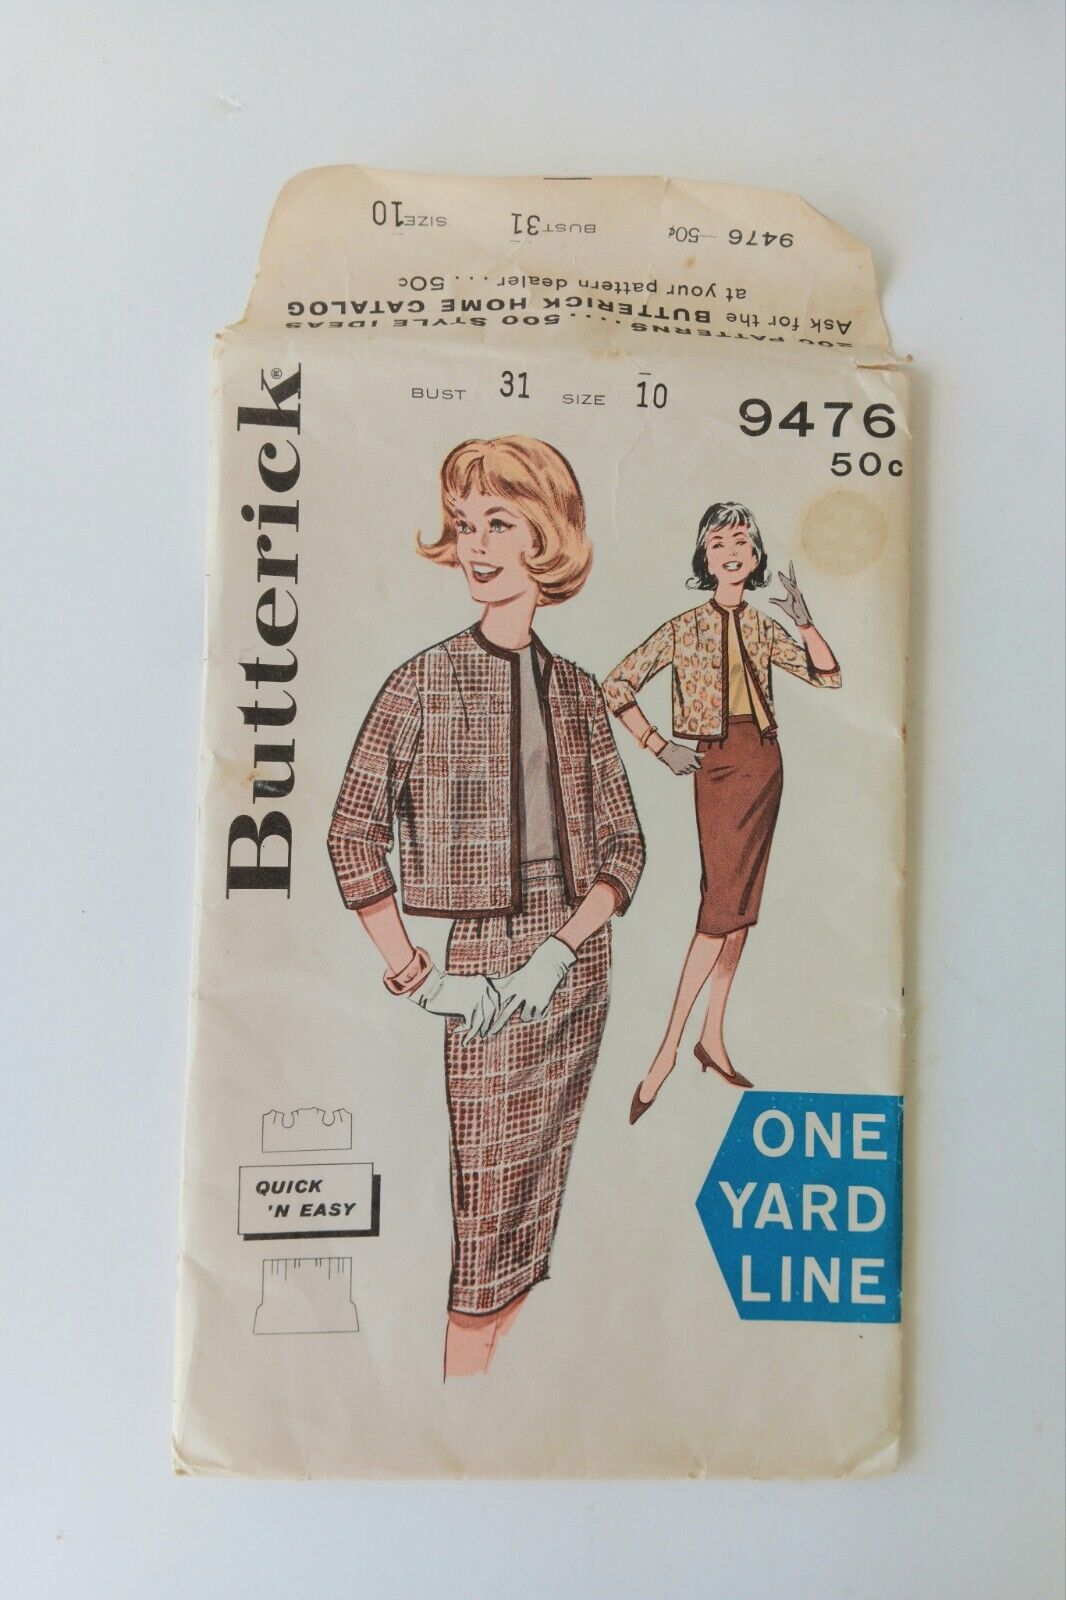 Butterick Pattern 9476 Misses Jacket And Skirt Size 10 Bust 31 Vintage Complete